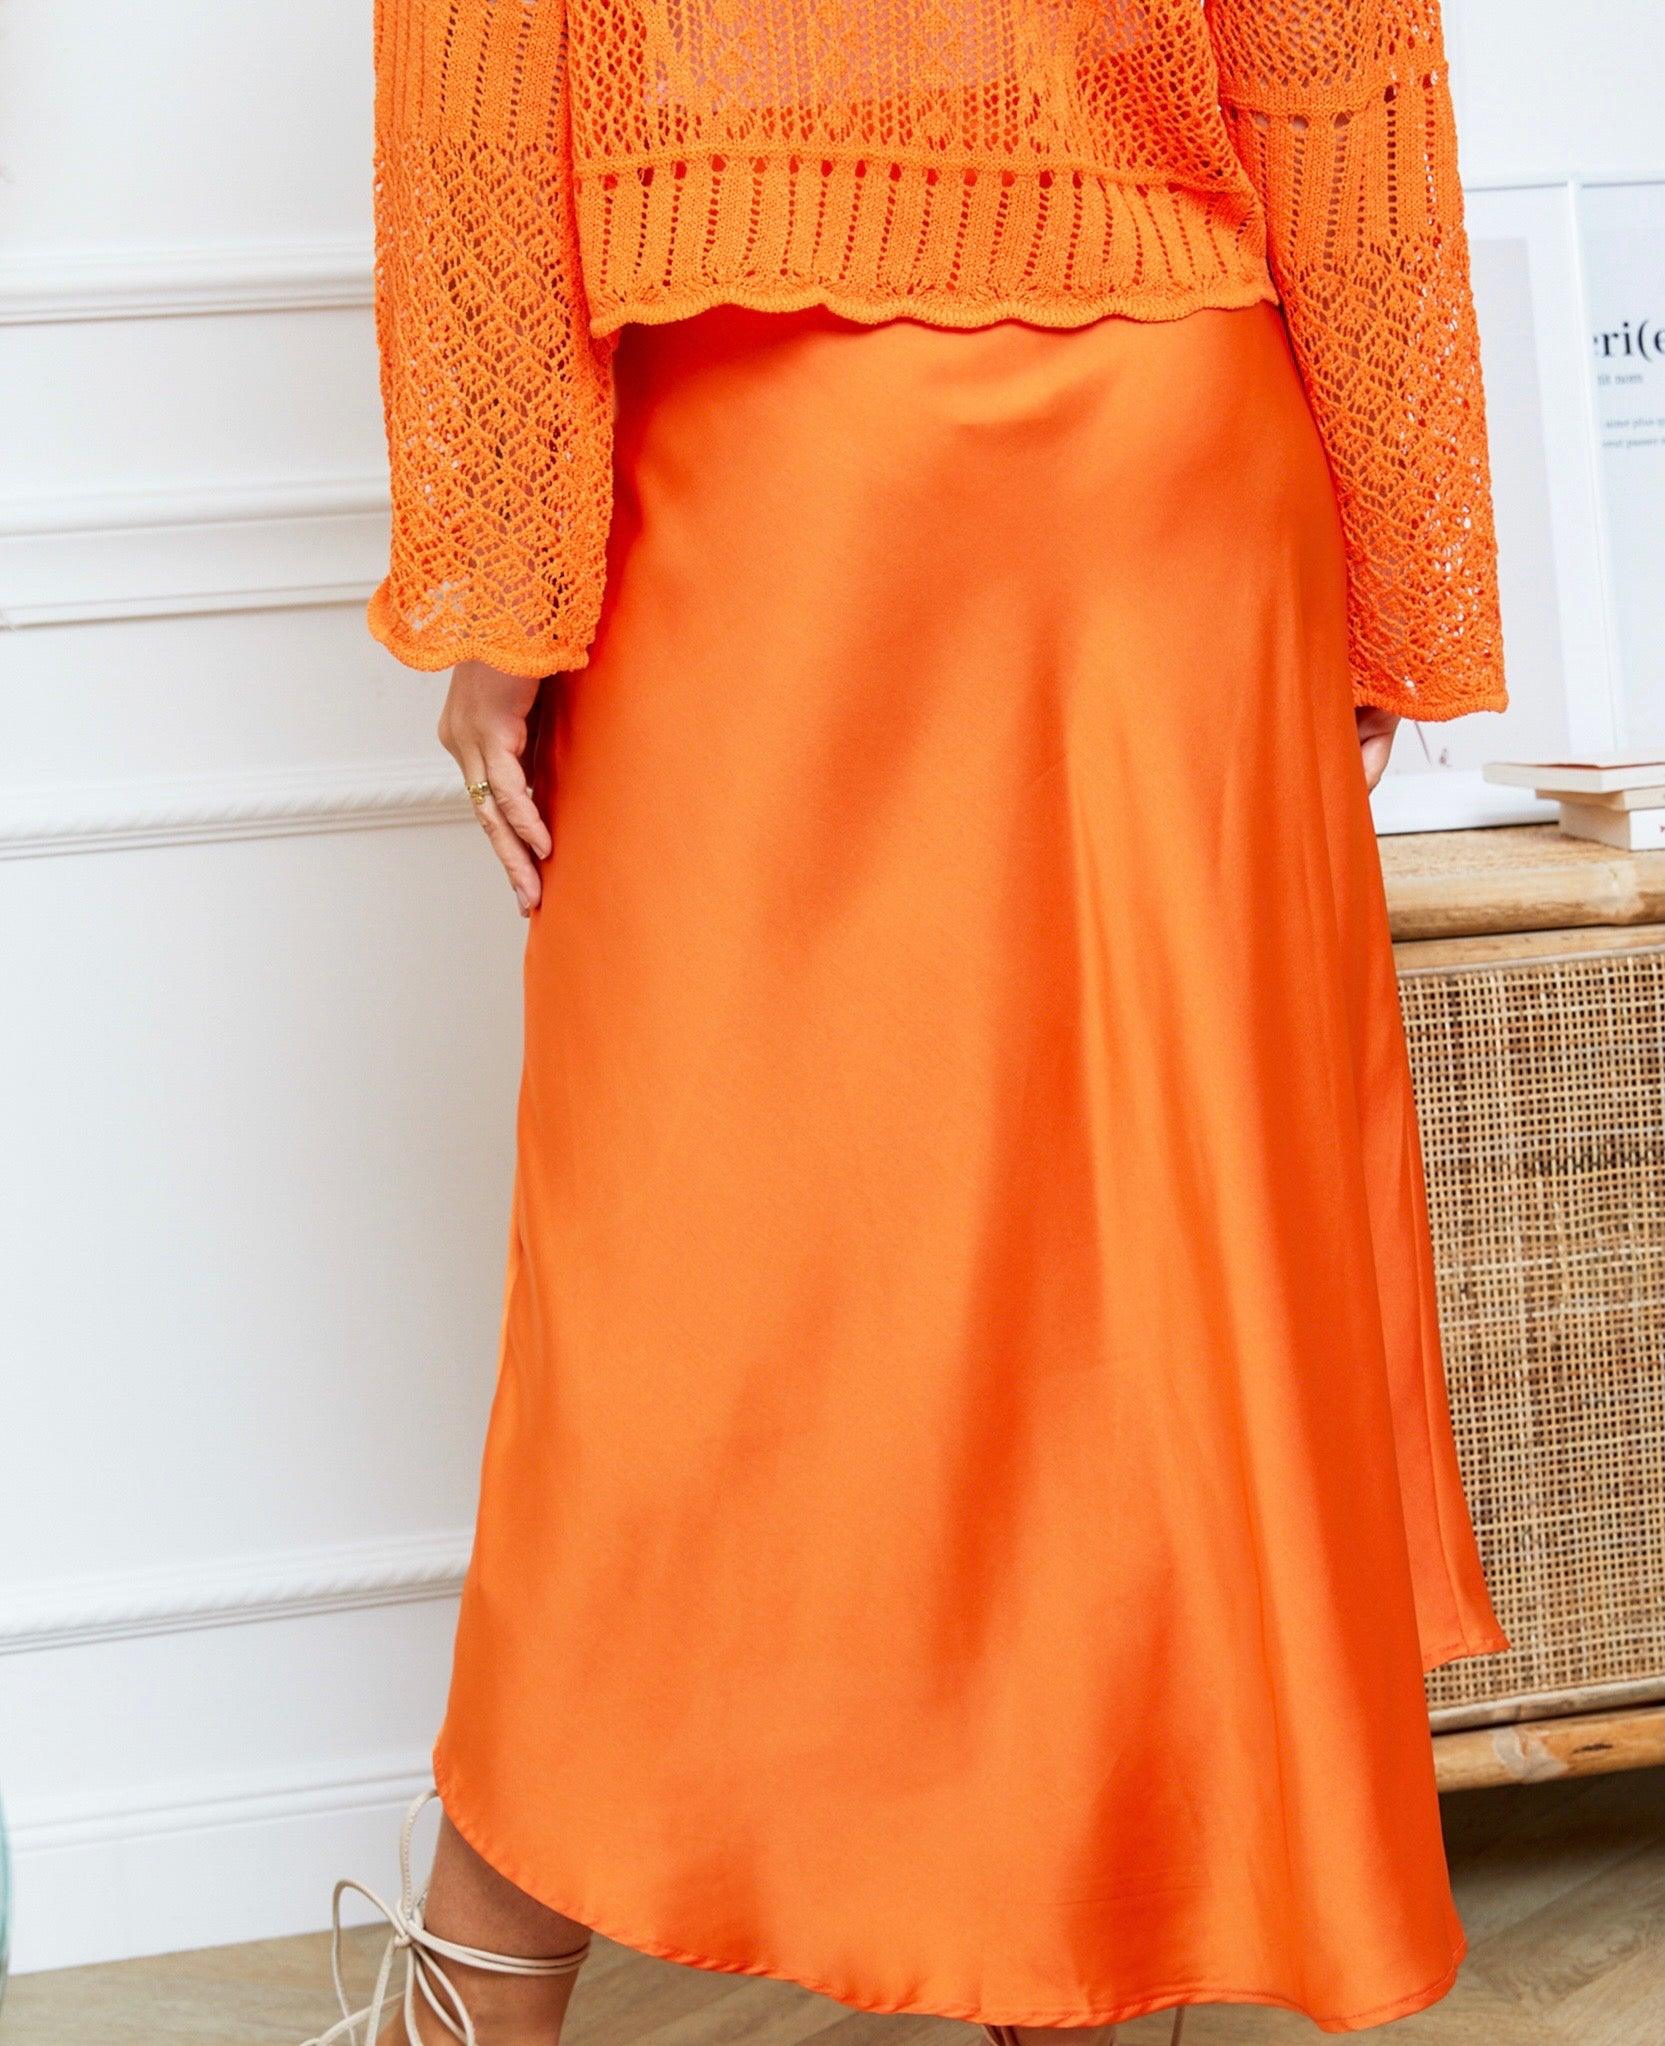 OutDazl - Satiny Midi Skirt in Orange - OutDazl